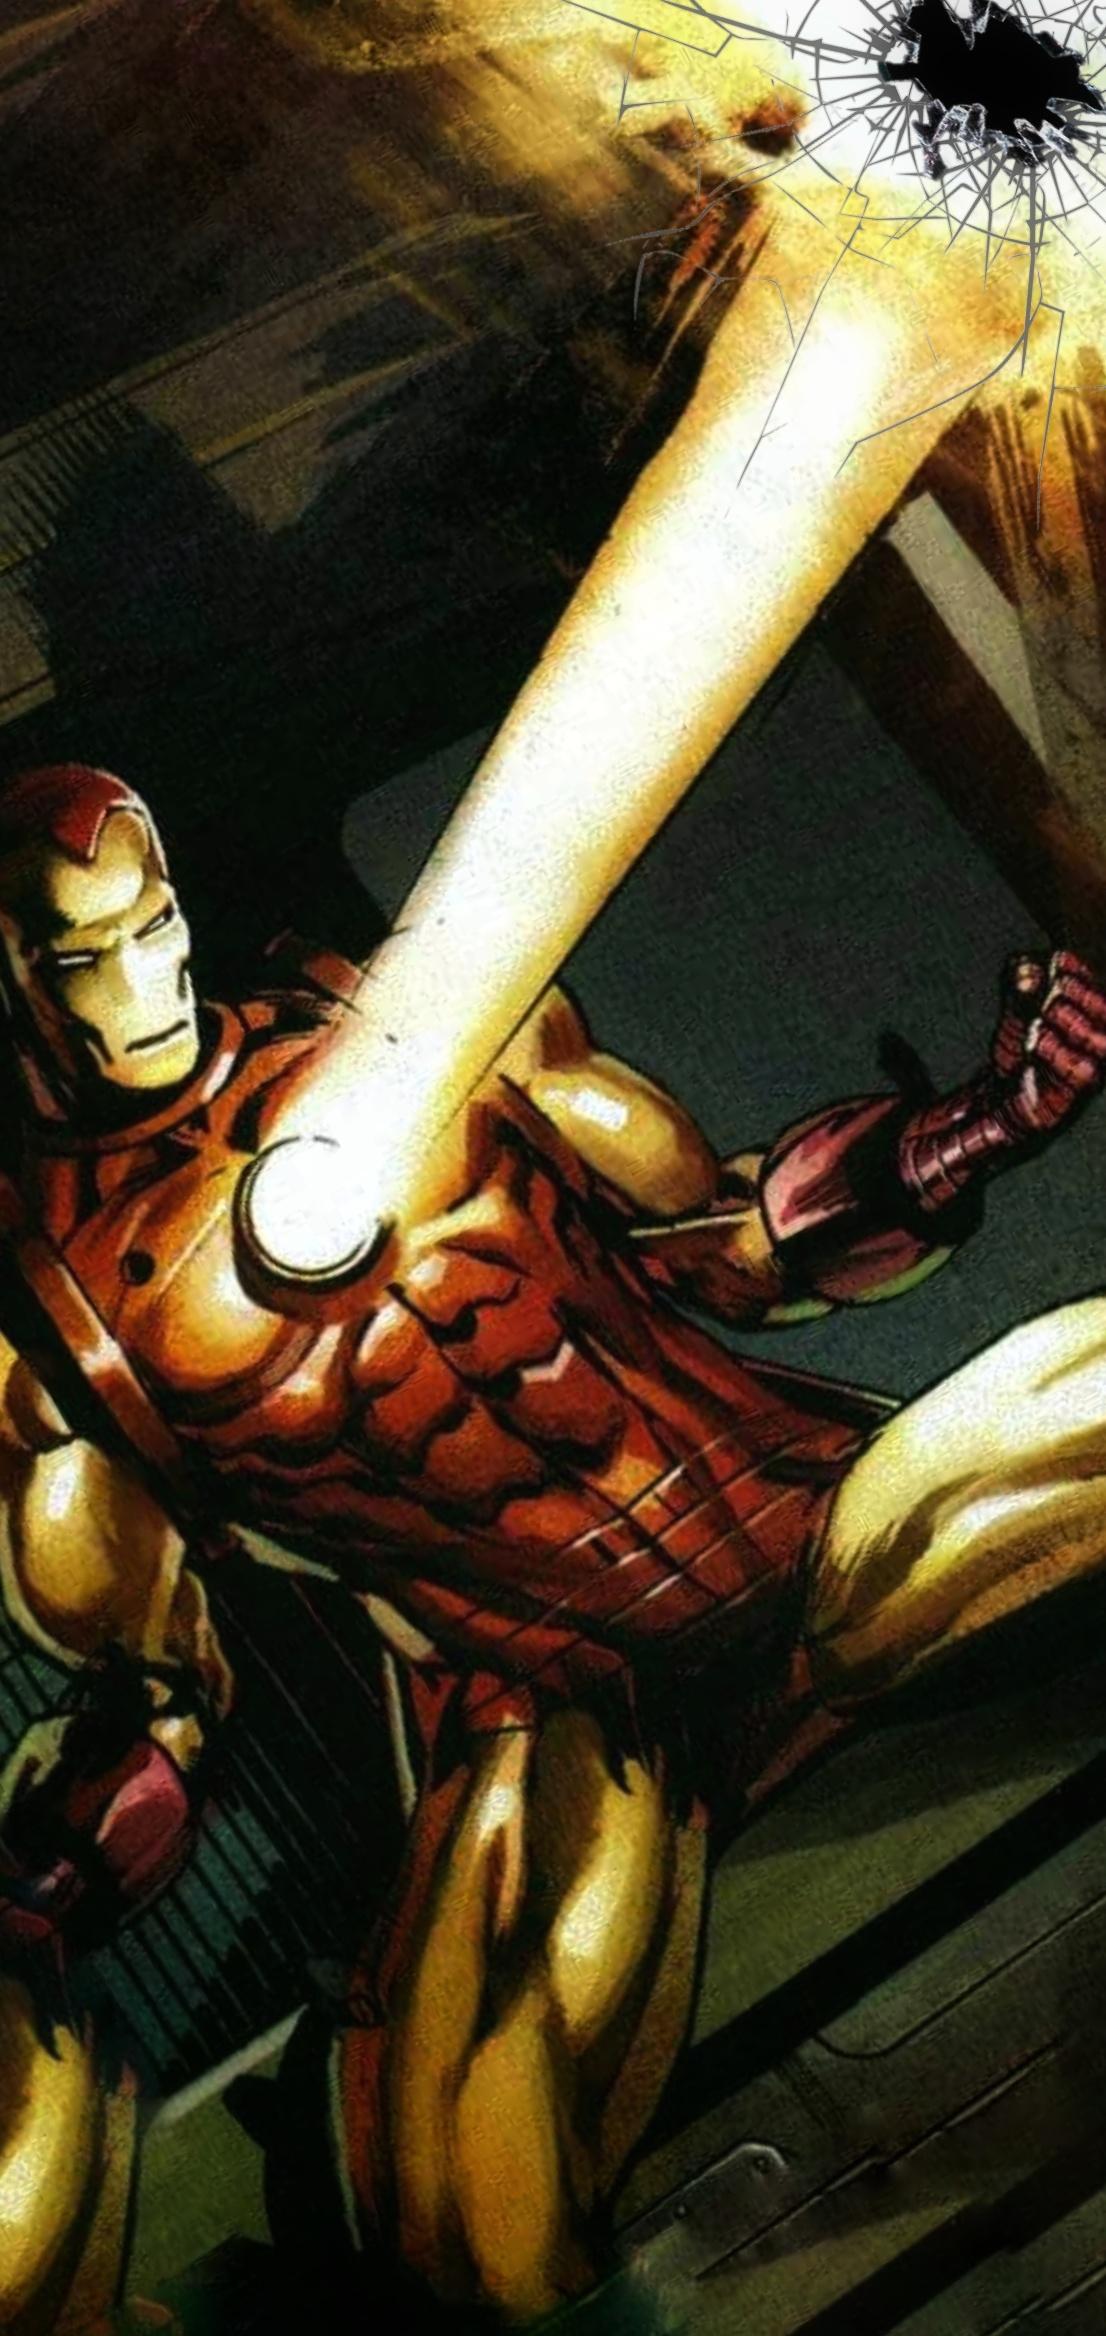 Iron Man Chest Blastreddit.com